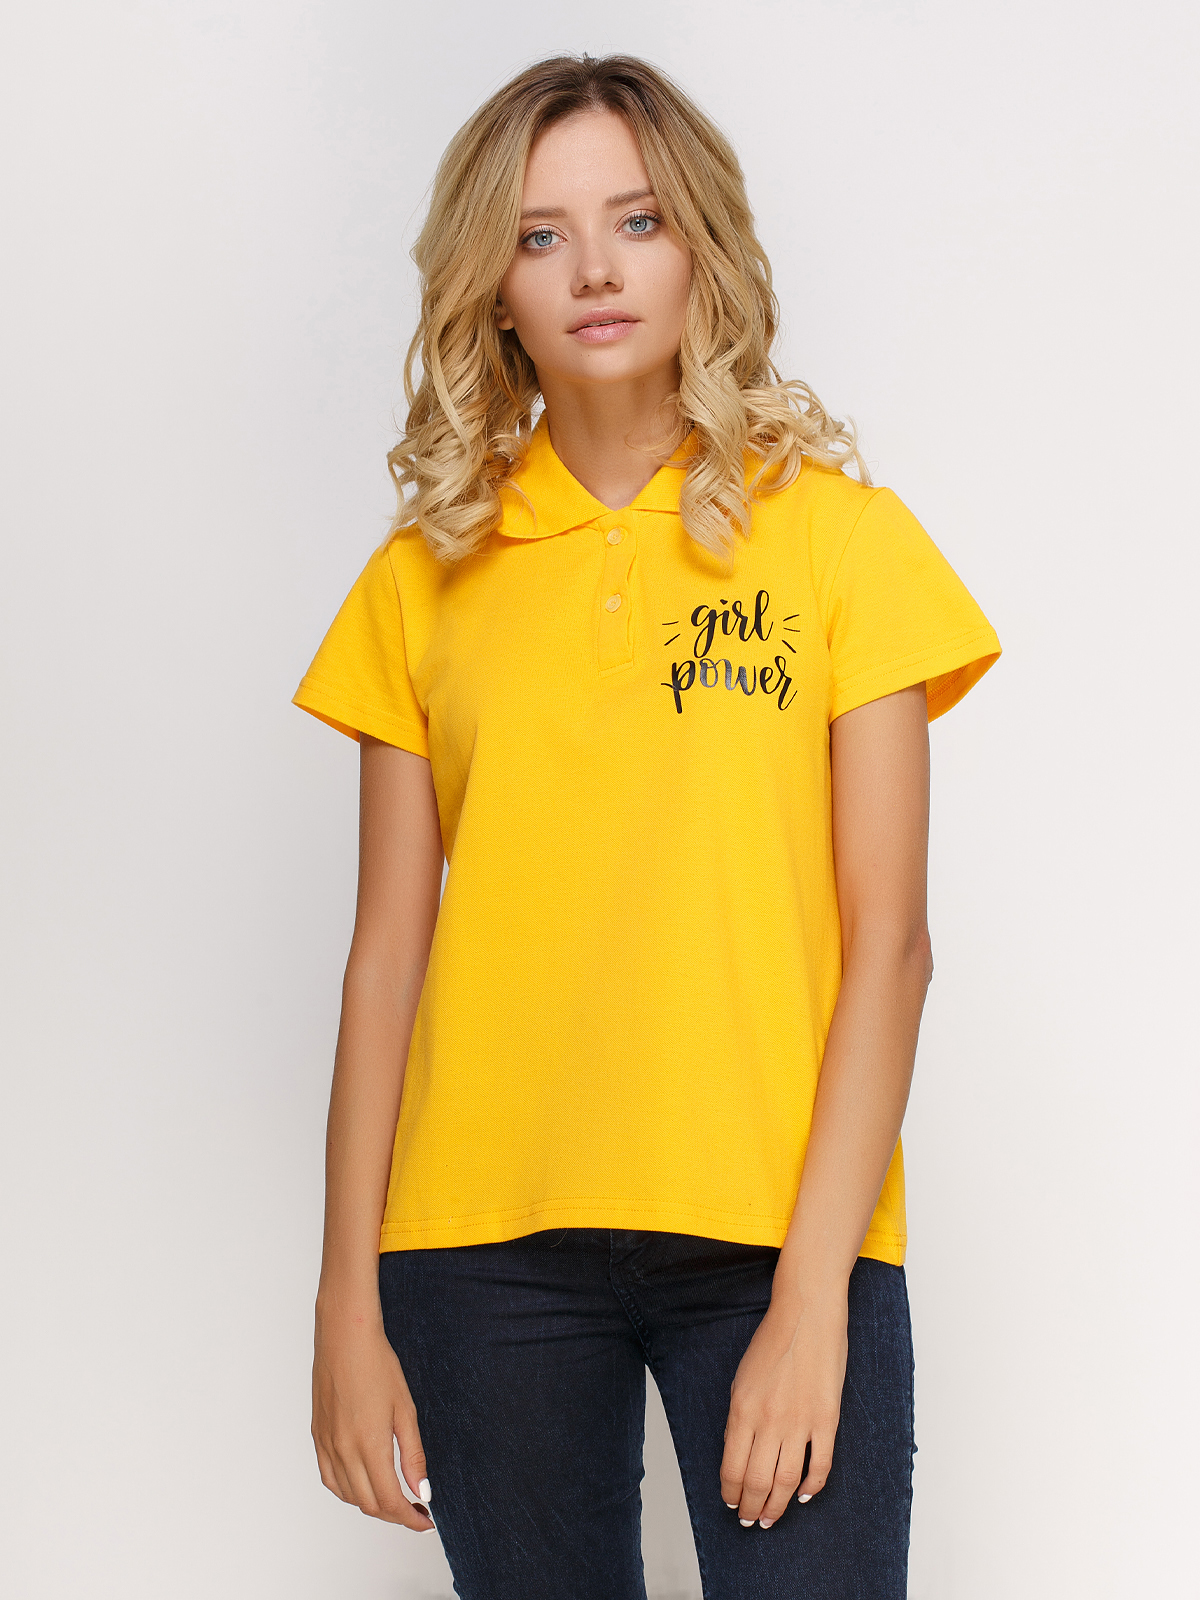 Желтая футболка для девушек